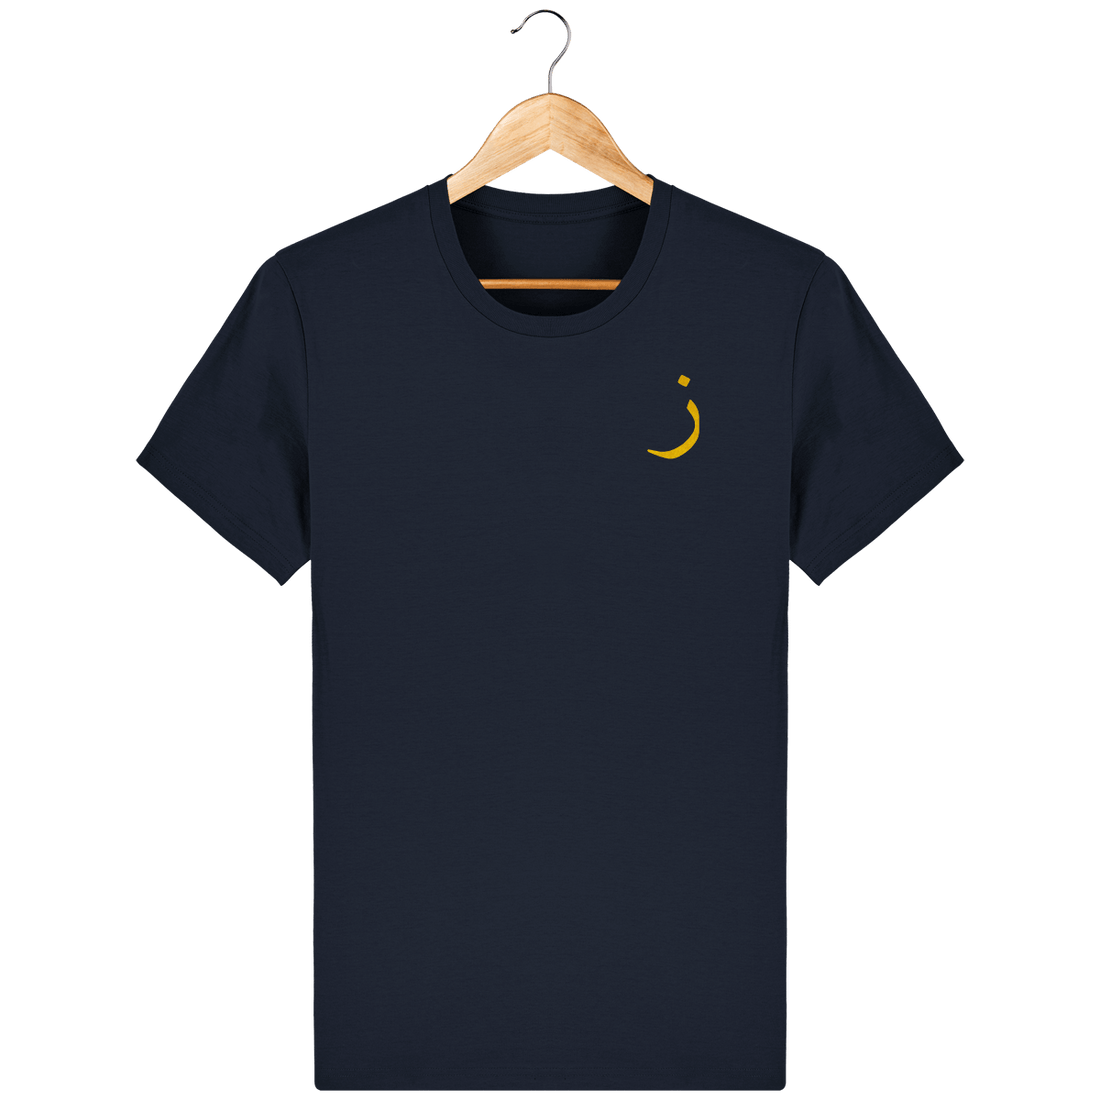 Unisexe>Tee-shirts - T-Shirt Homme <br> Lettre Arabe Zain